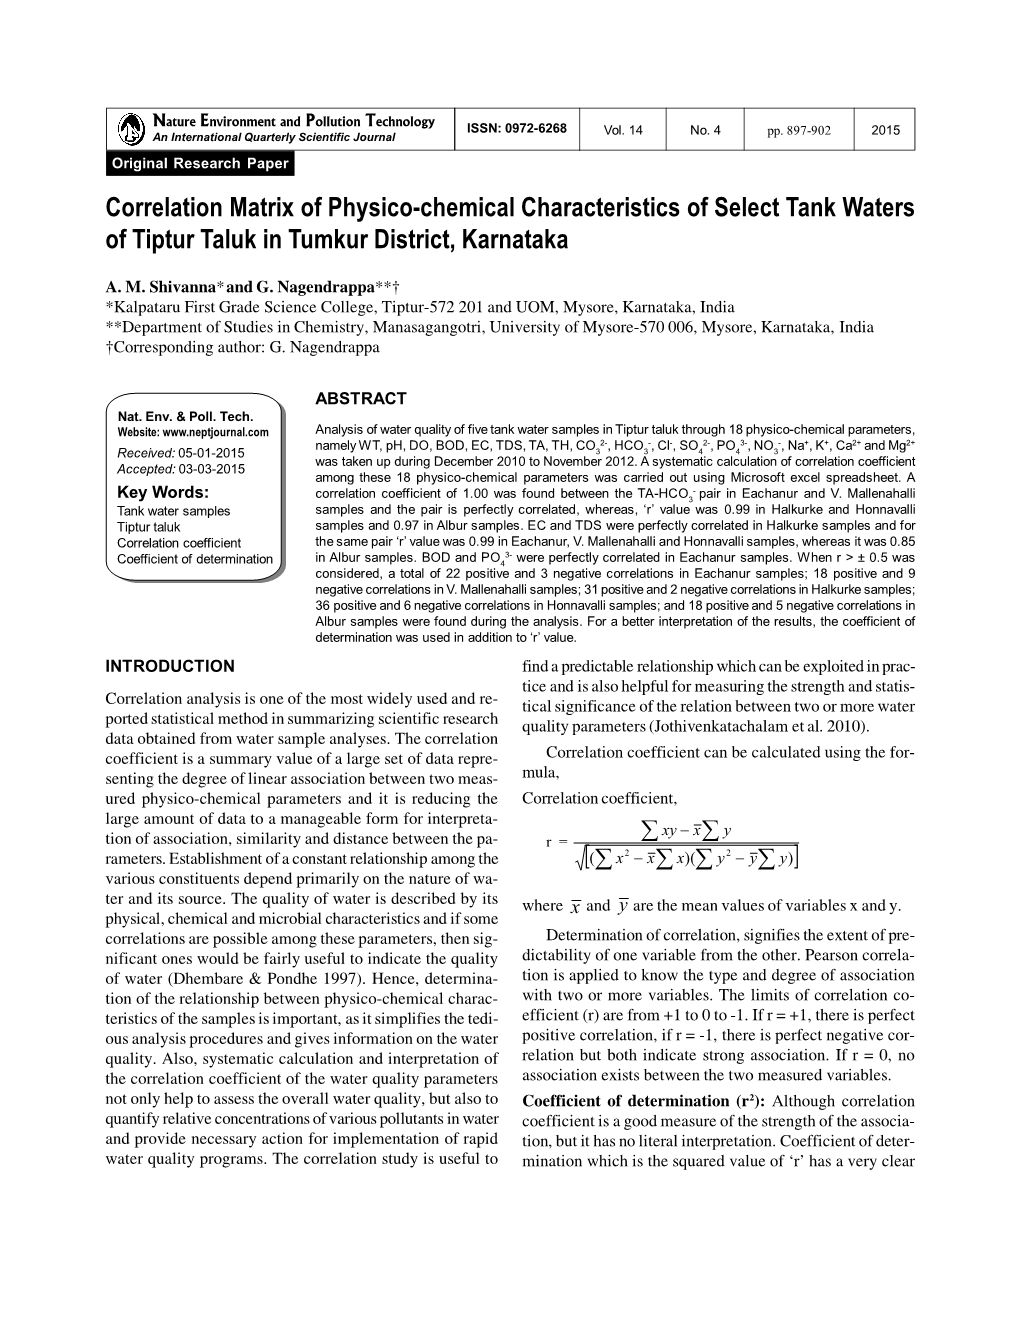 Correlation Matrix of Physico-Chemical Characteristics of Select Tank Waters of Tiptur Taluk in Tumkur District, Karnataka